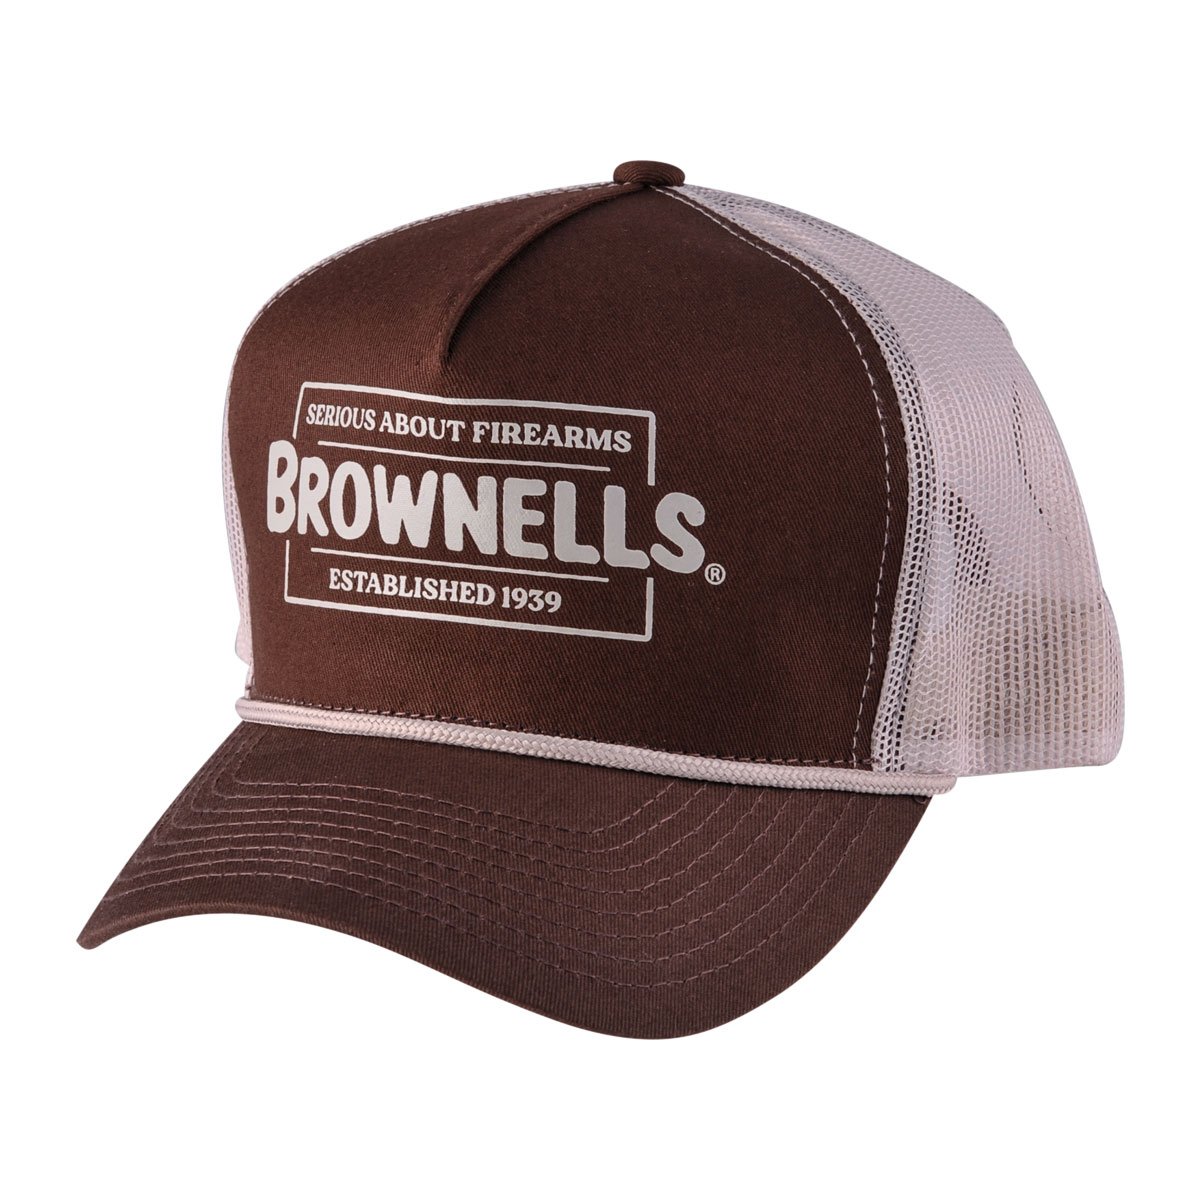 BROWNELLS - CLASSIC TRUCKER CAP